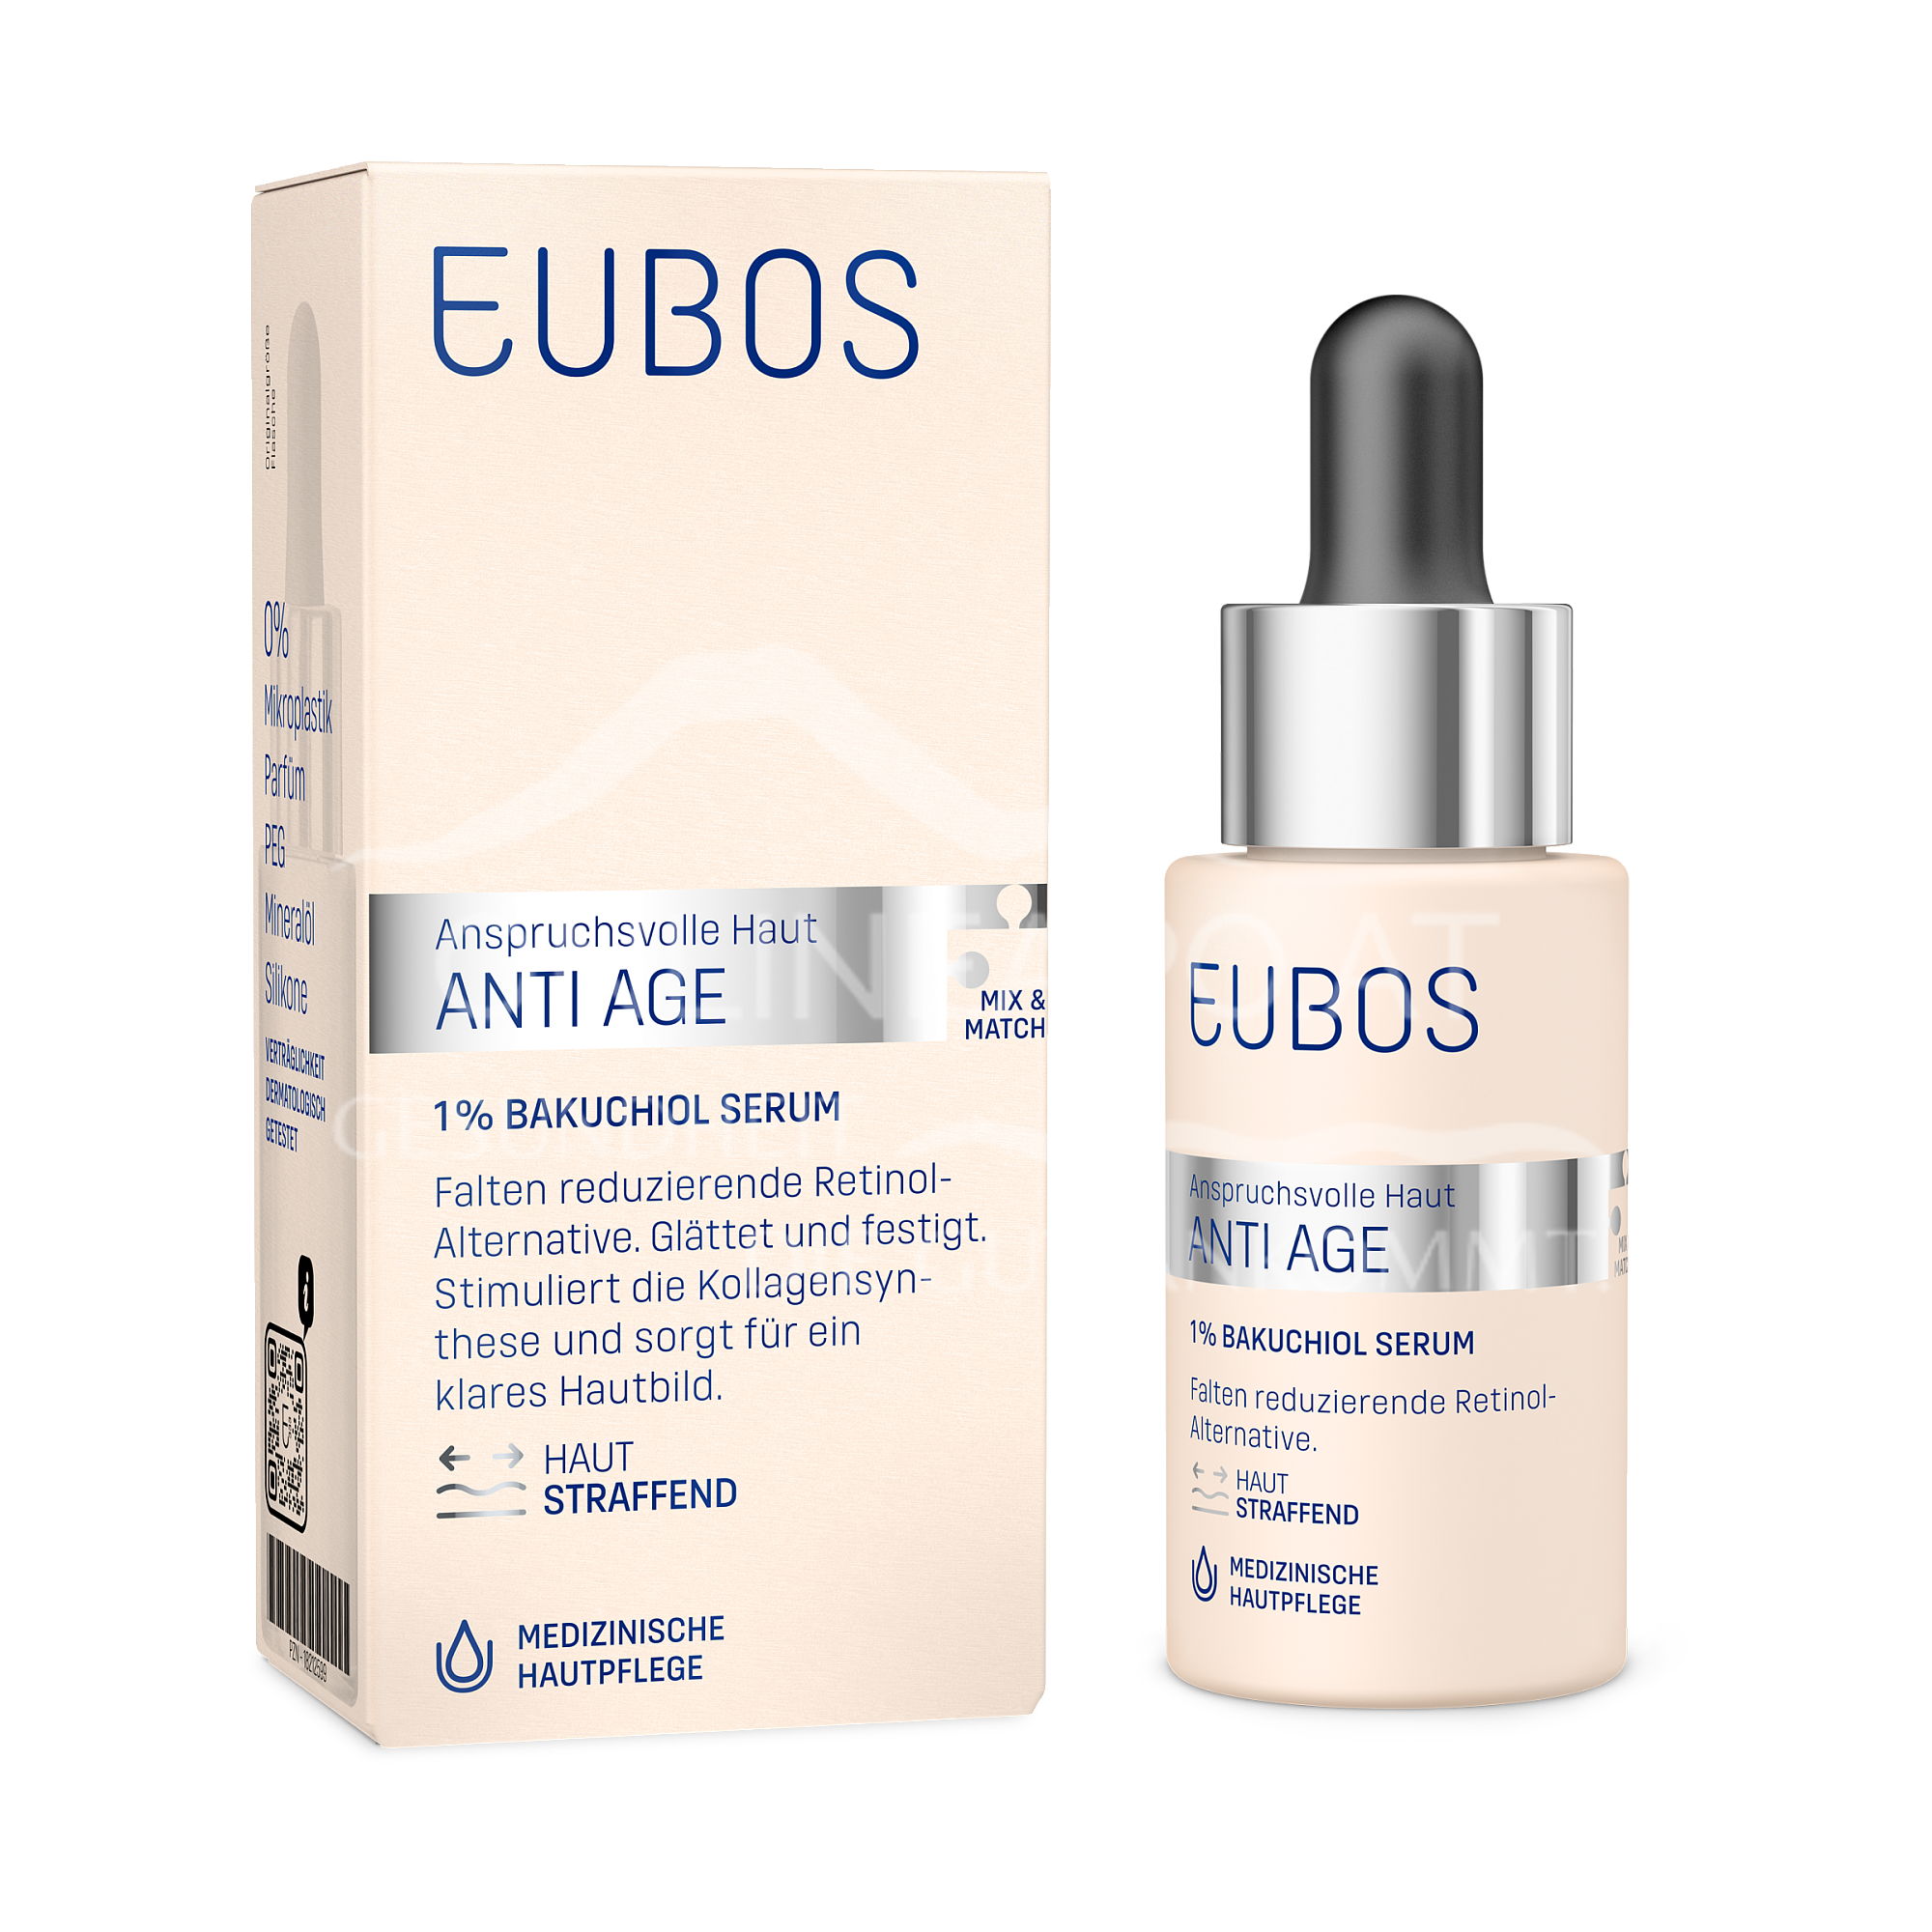 Eubos Anti Age 1% Bakuchiol Serum